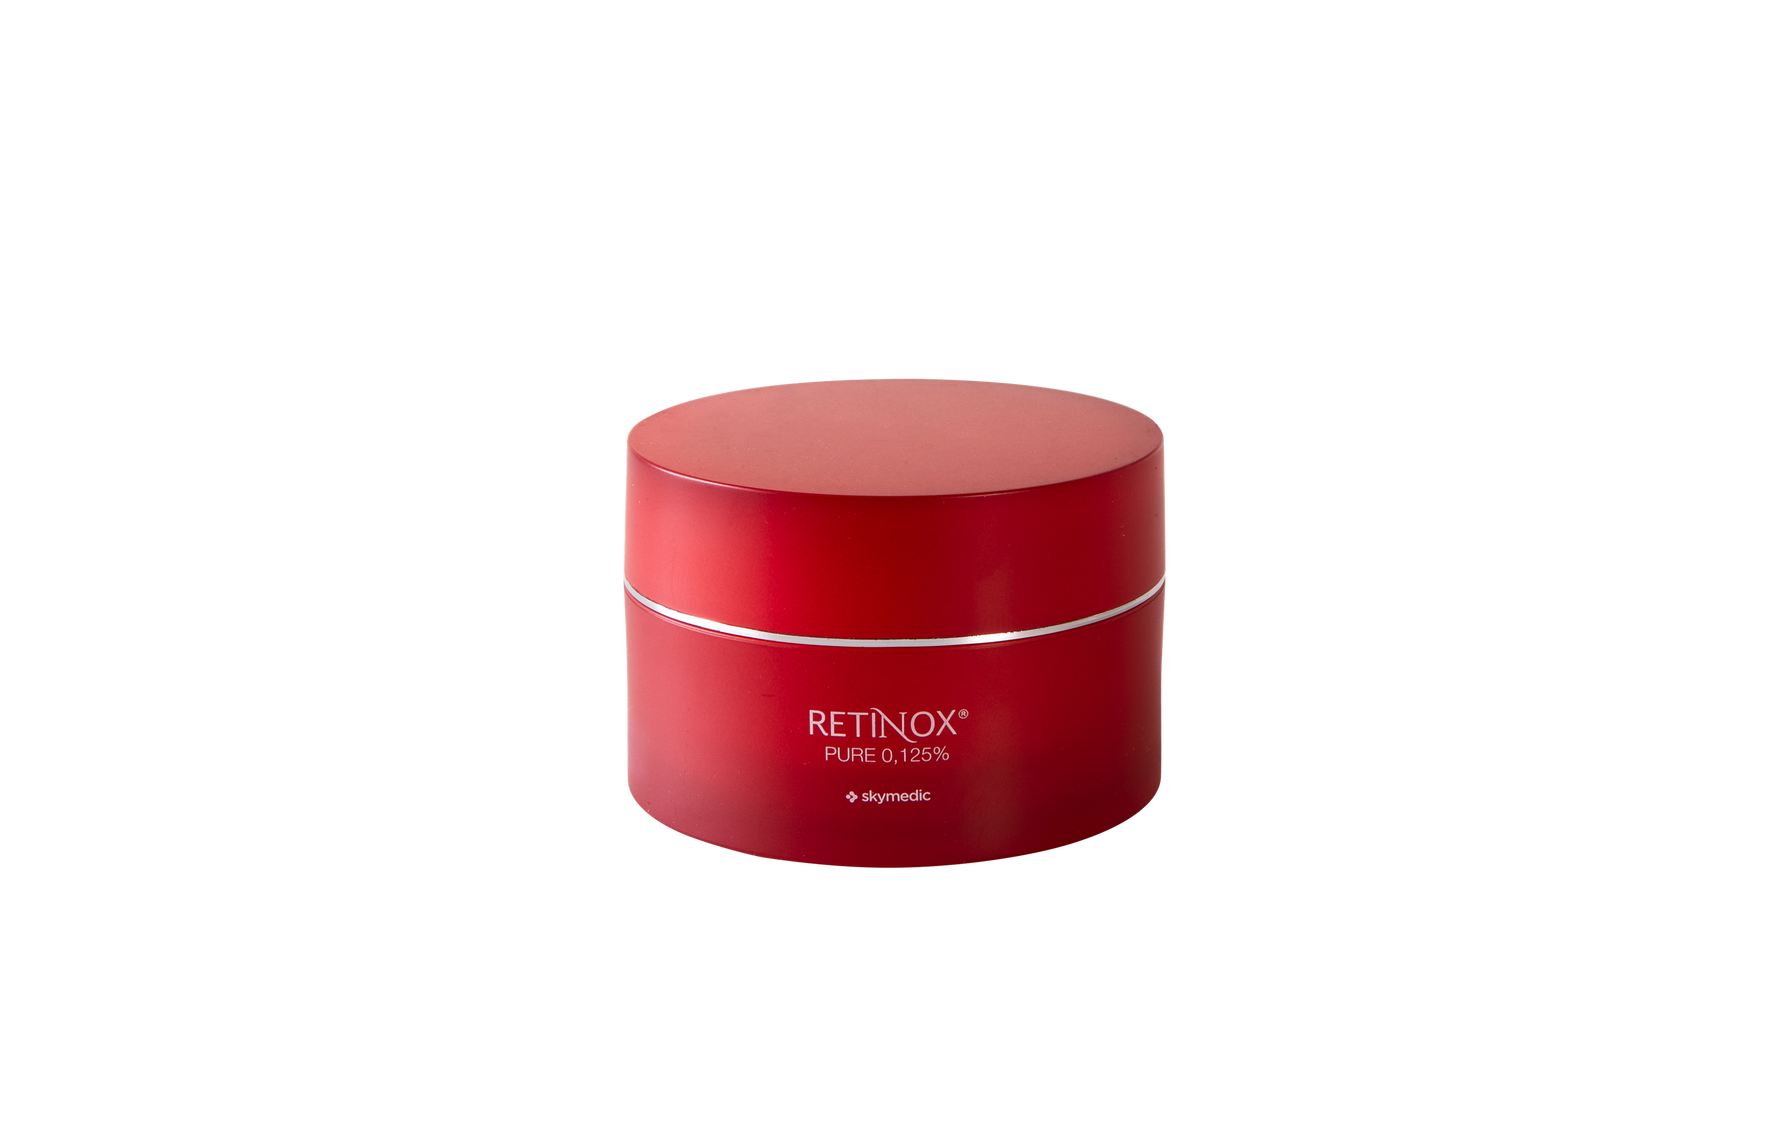 Retinox Light 0,125% Crema (50ml)